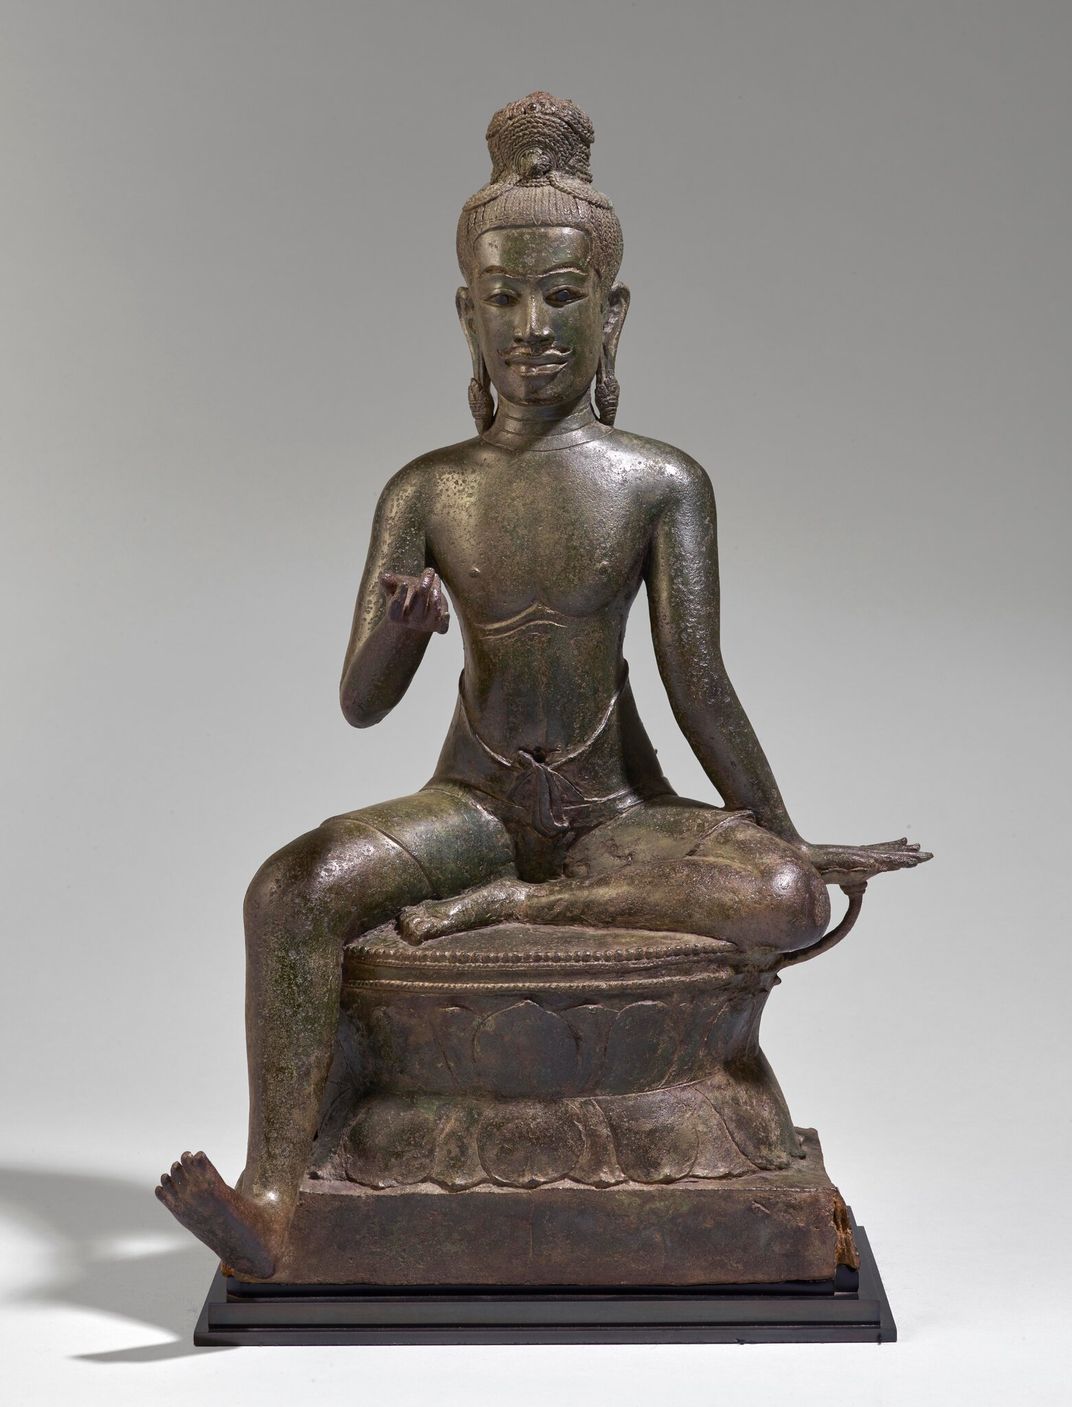 A bronze deity from around the 11th century